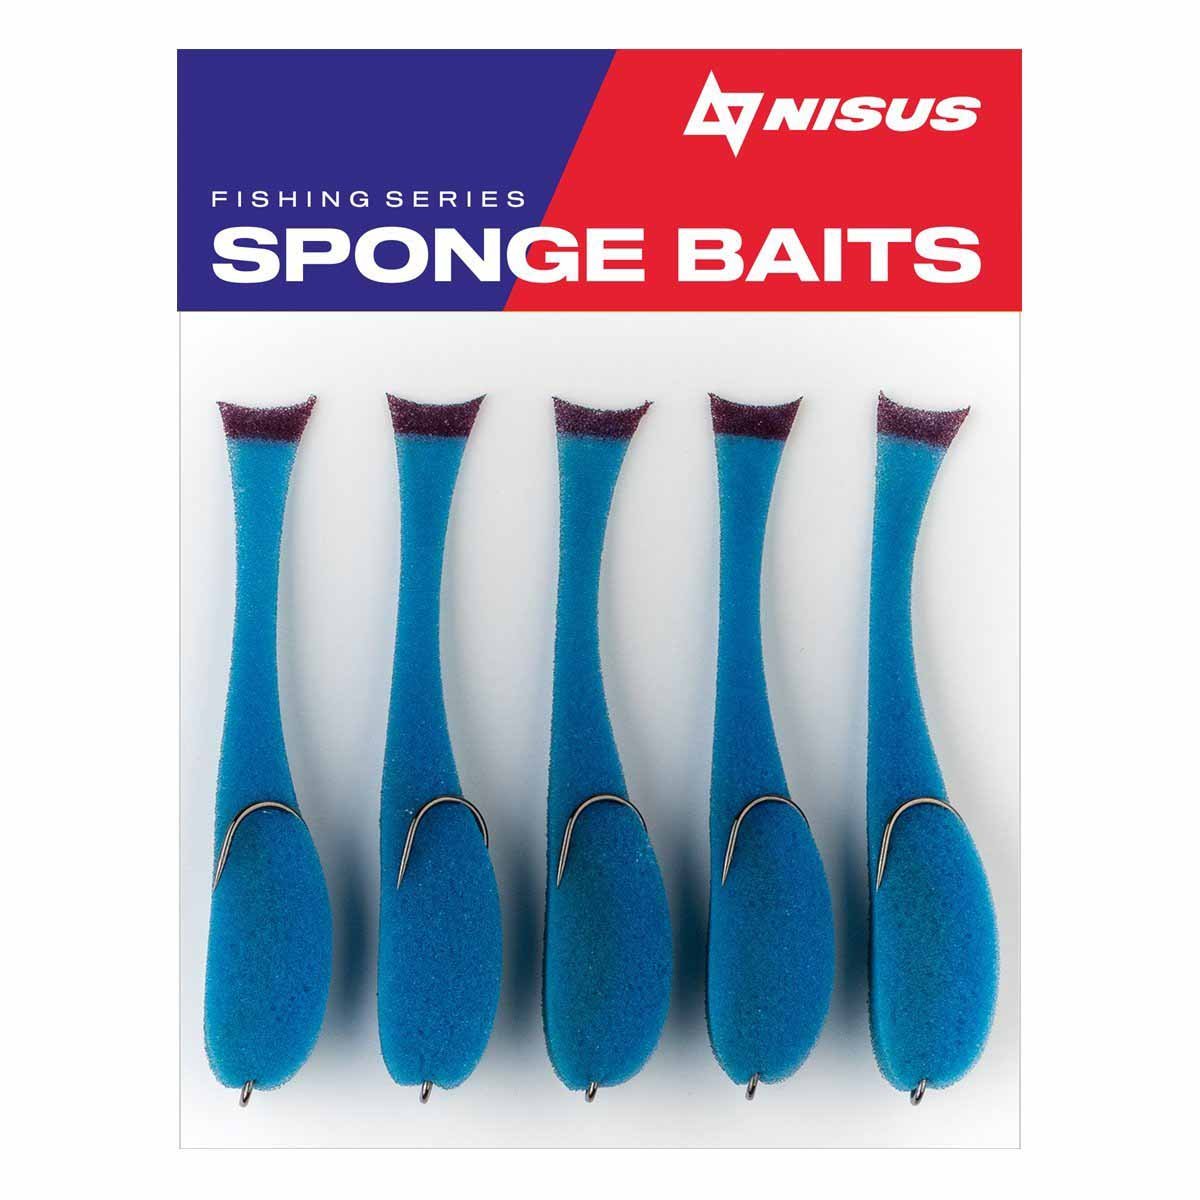 Nisus 4.5 inch Sponge Bait Fishing Lure, pack of 5 – TONAREX